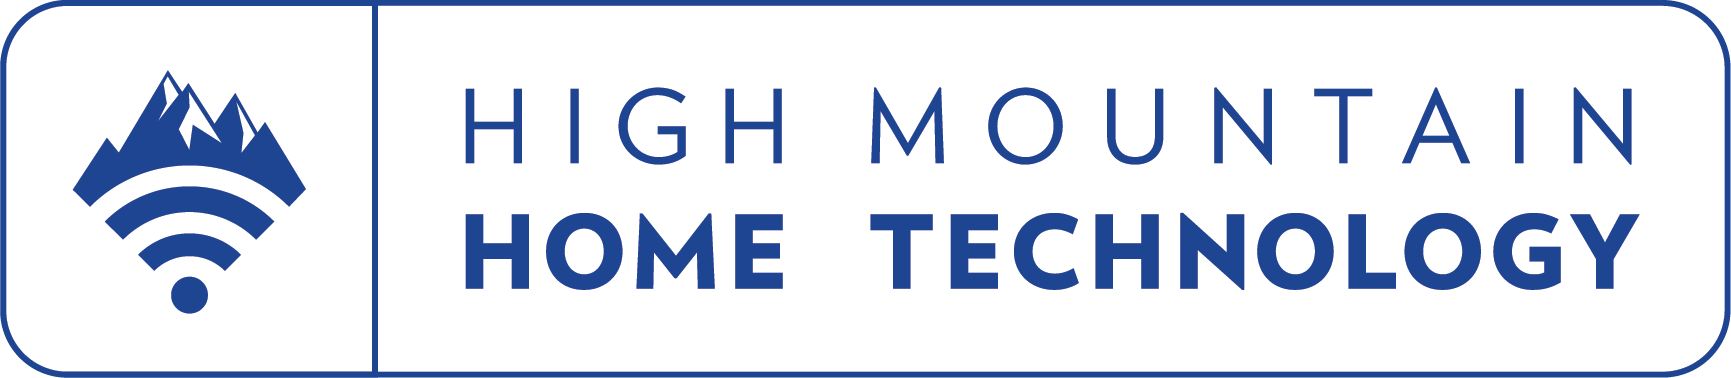 High Mountain Home Technology